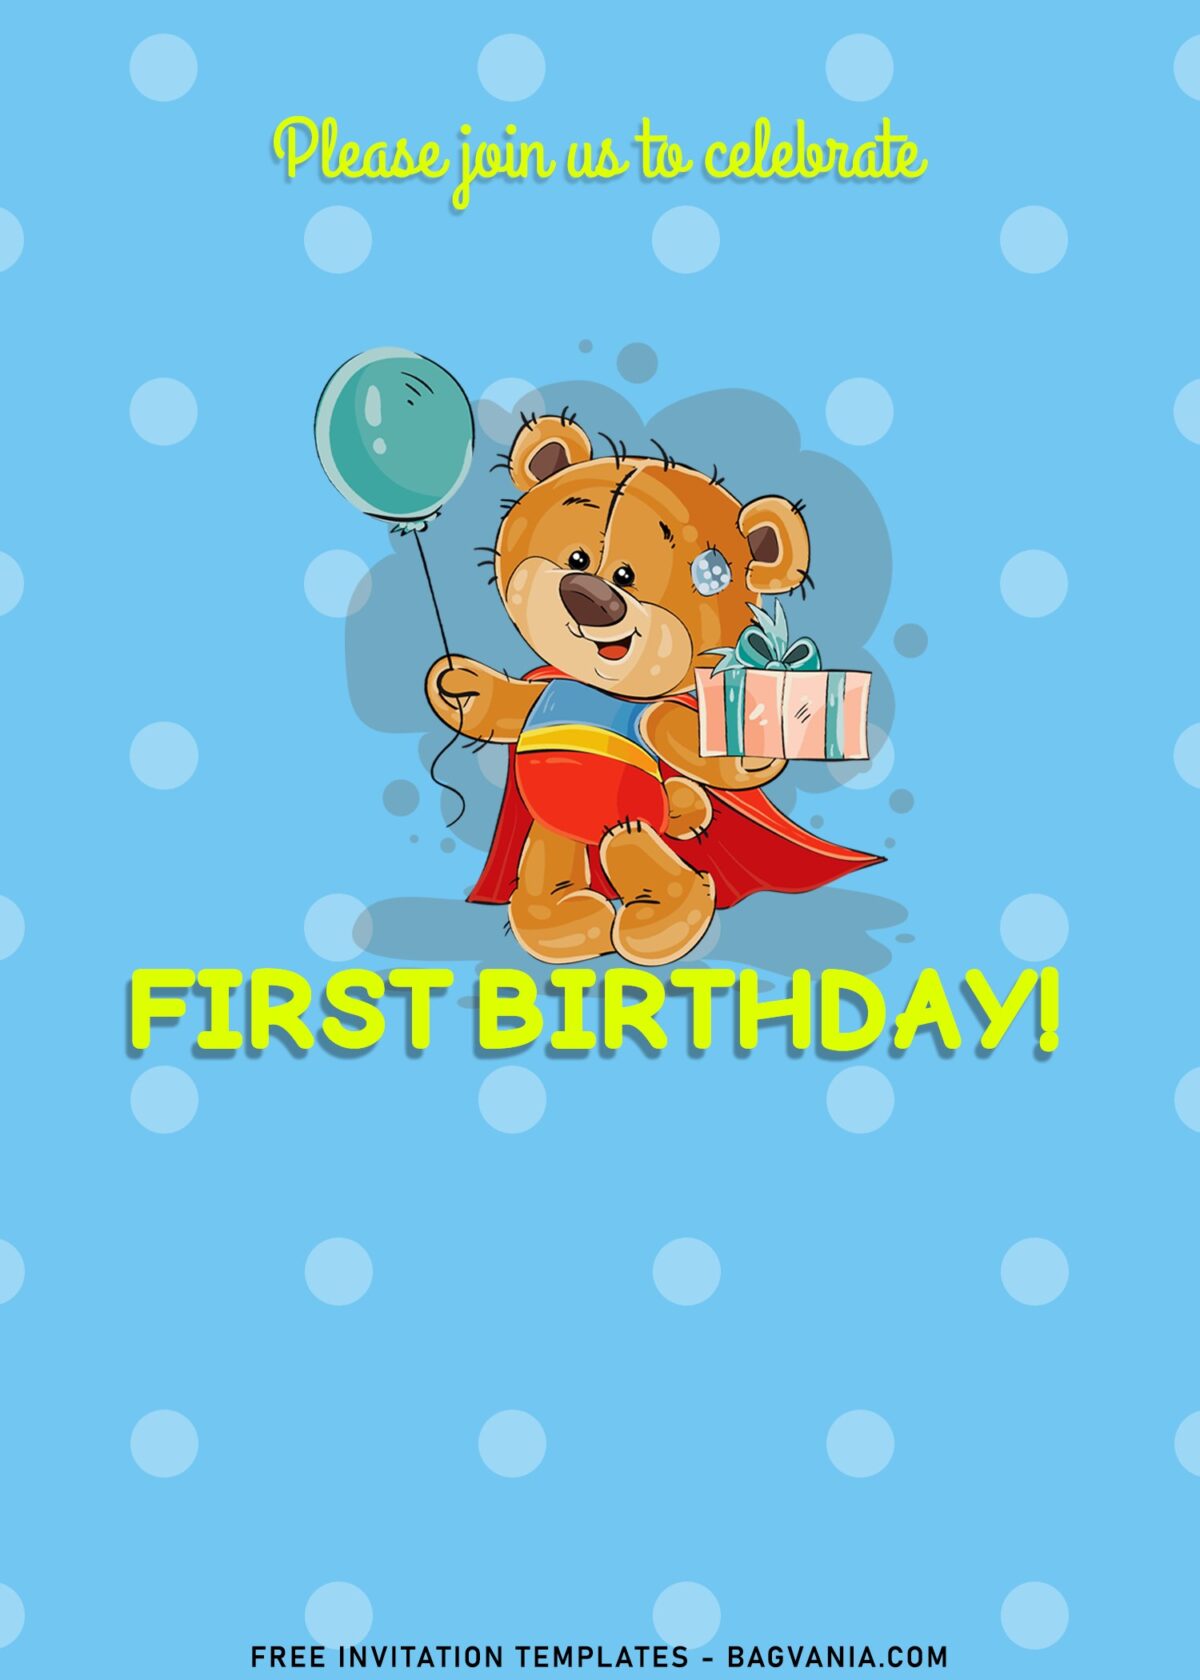 10+ Lovable Watercolor Teddy Bear Birthday Invitation Templates with polka dot background